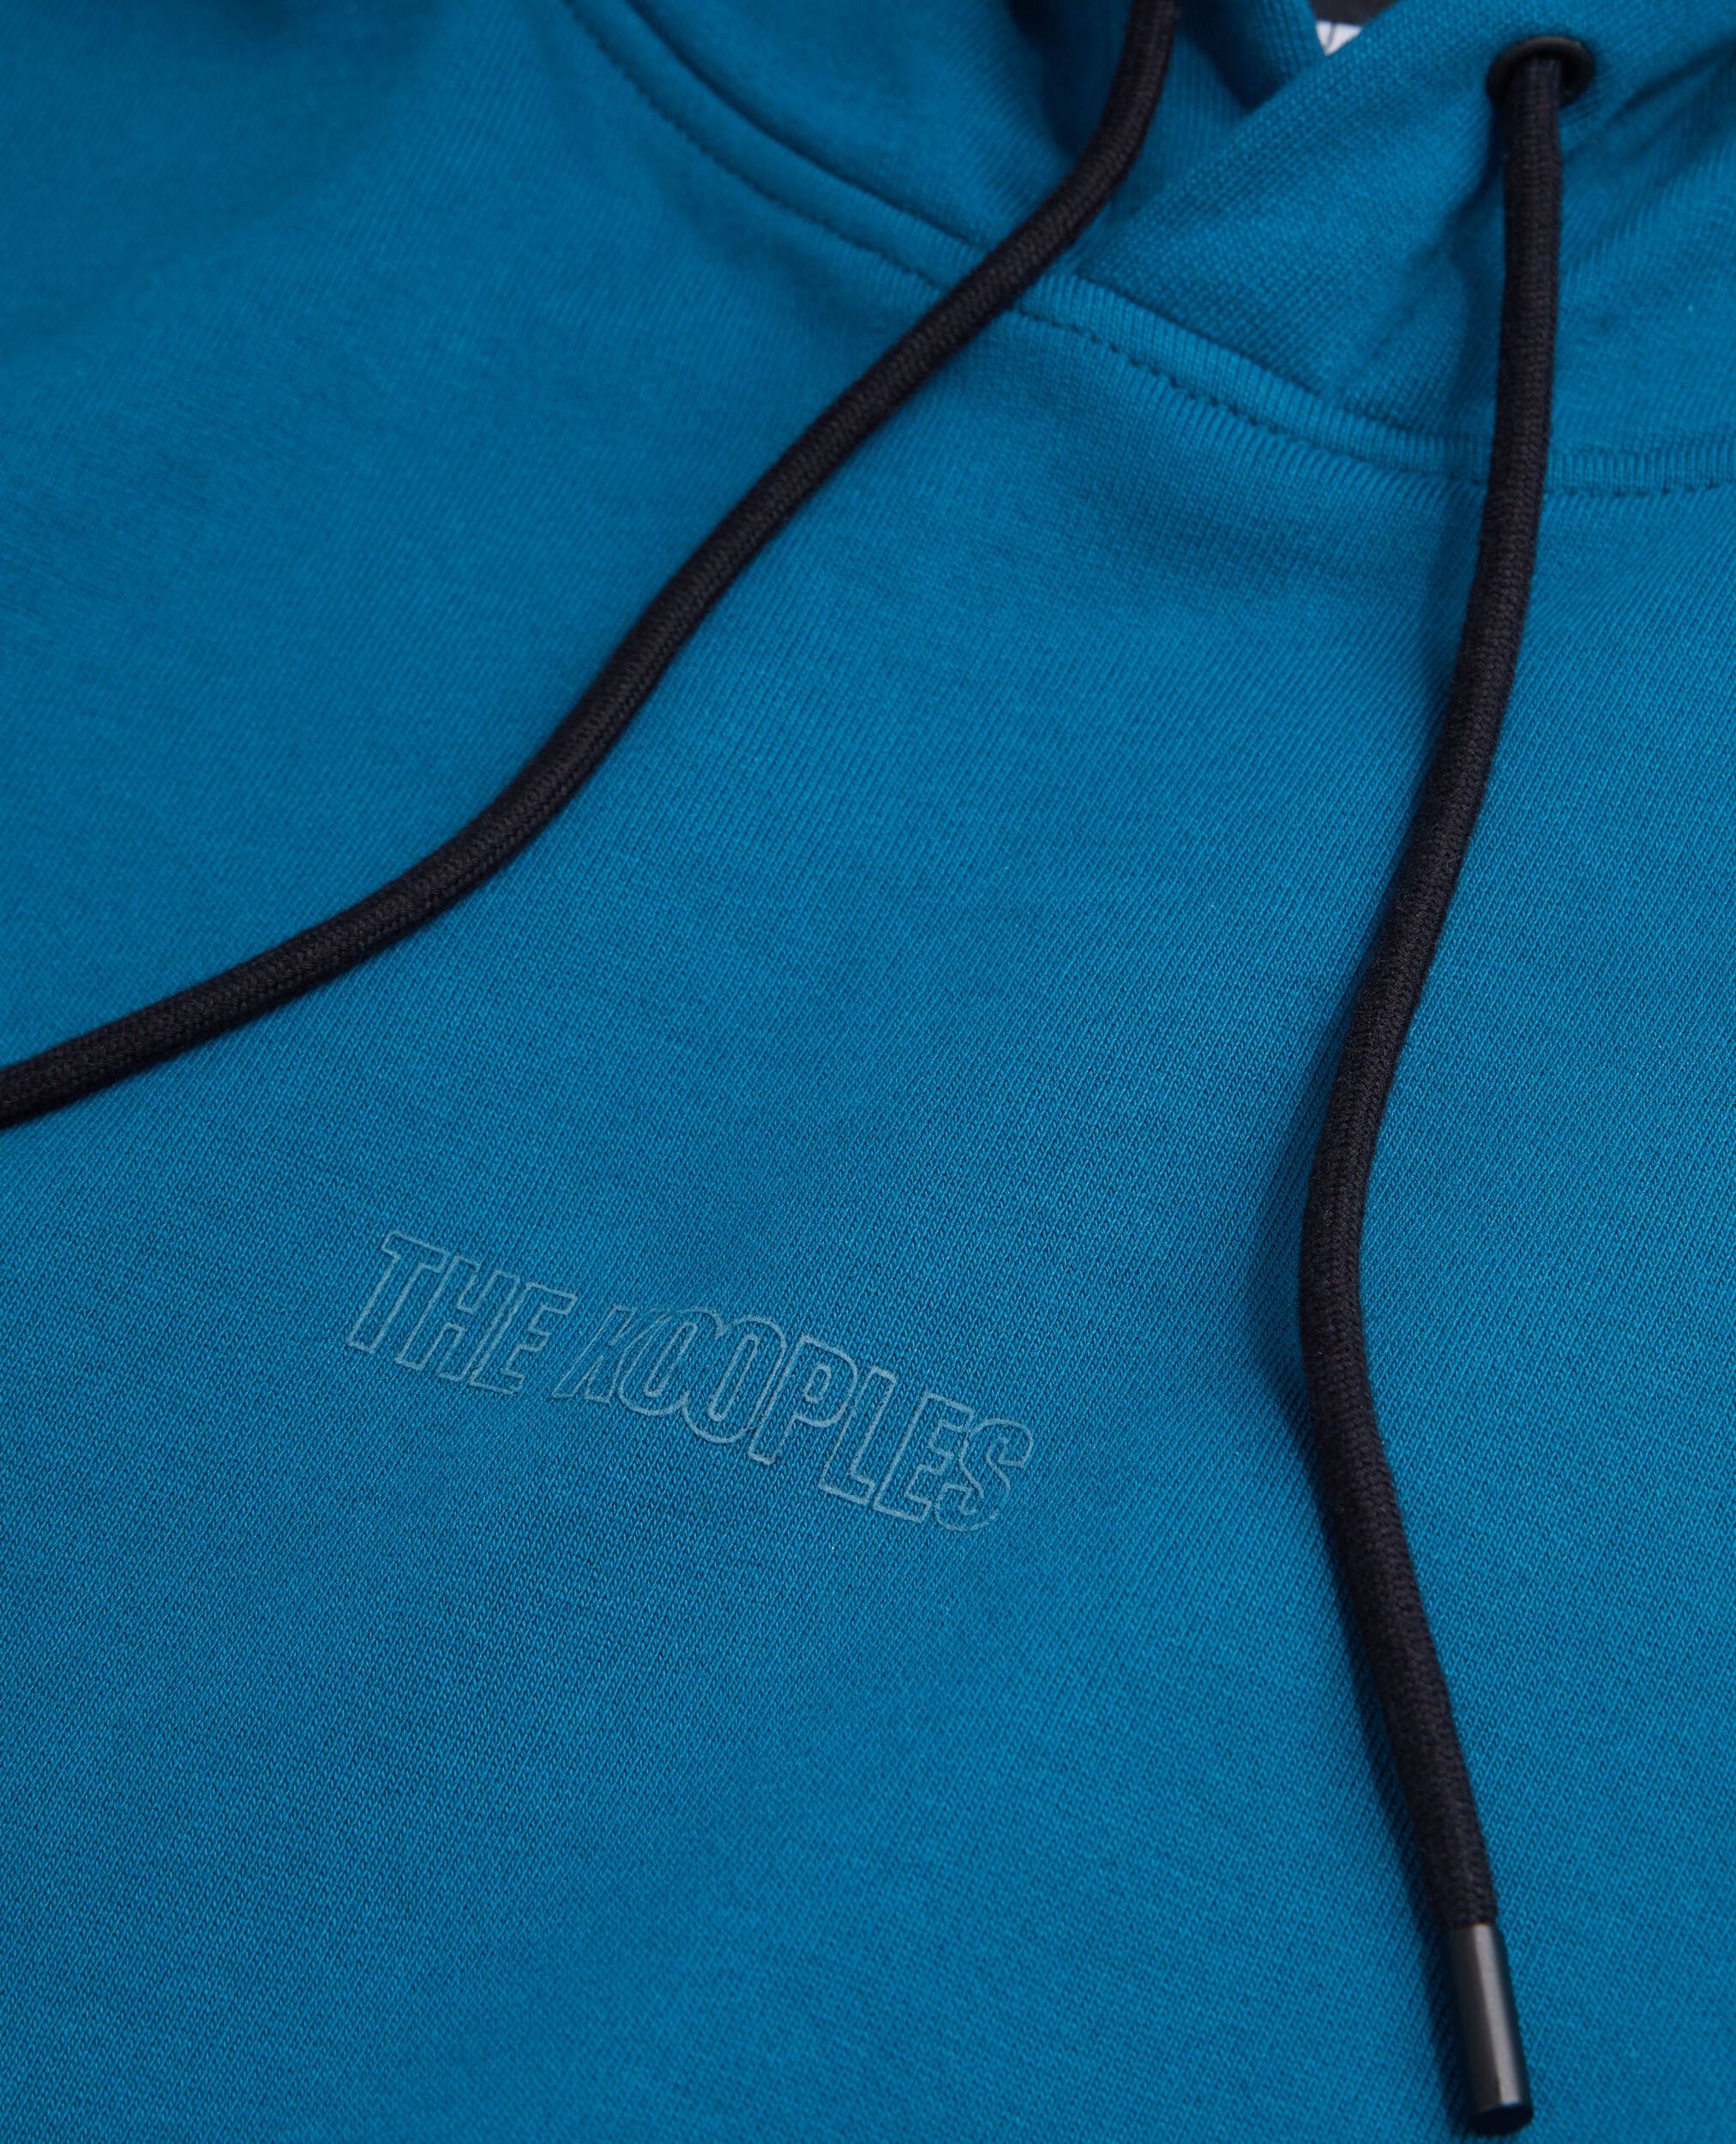 Sweatshirt Homme à capuche bleu avec logo, MEDIUM BLUE, hi-res image number null